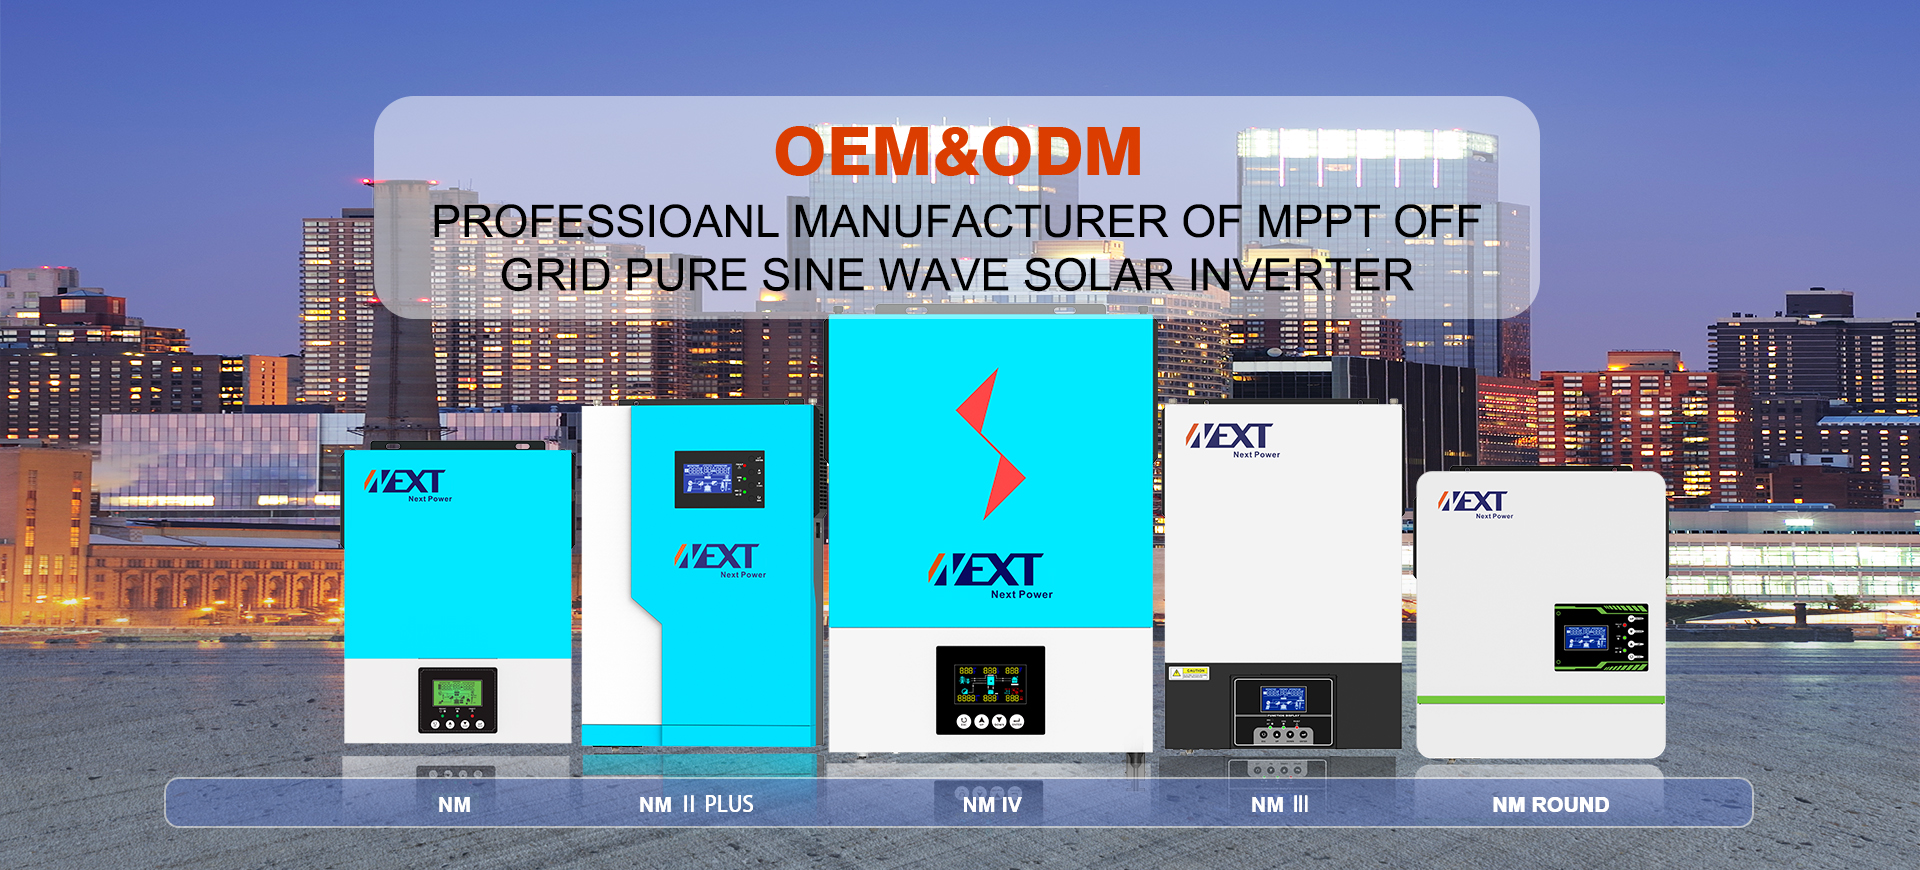 Massive 3 Phase Solar Inverter